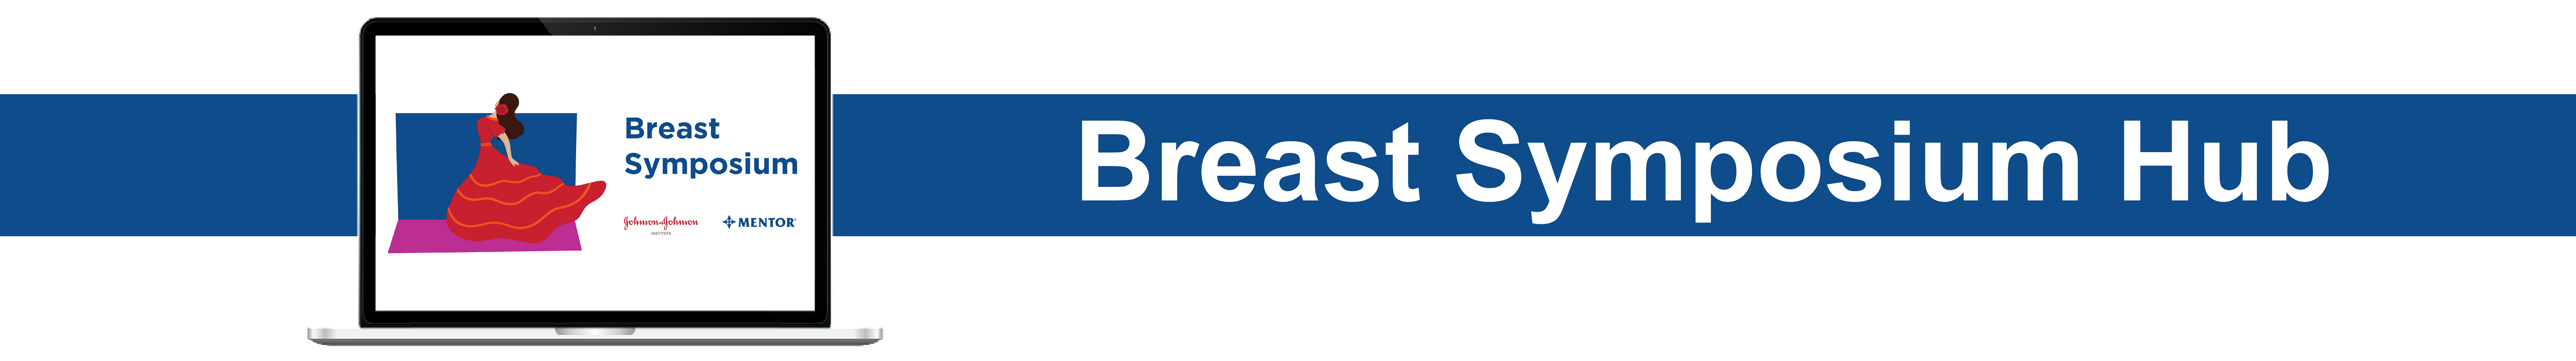 Mentor breast symposium hub